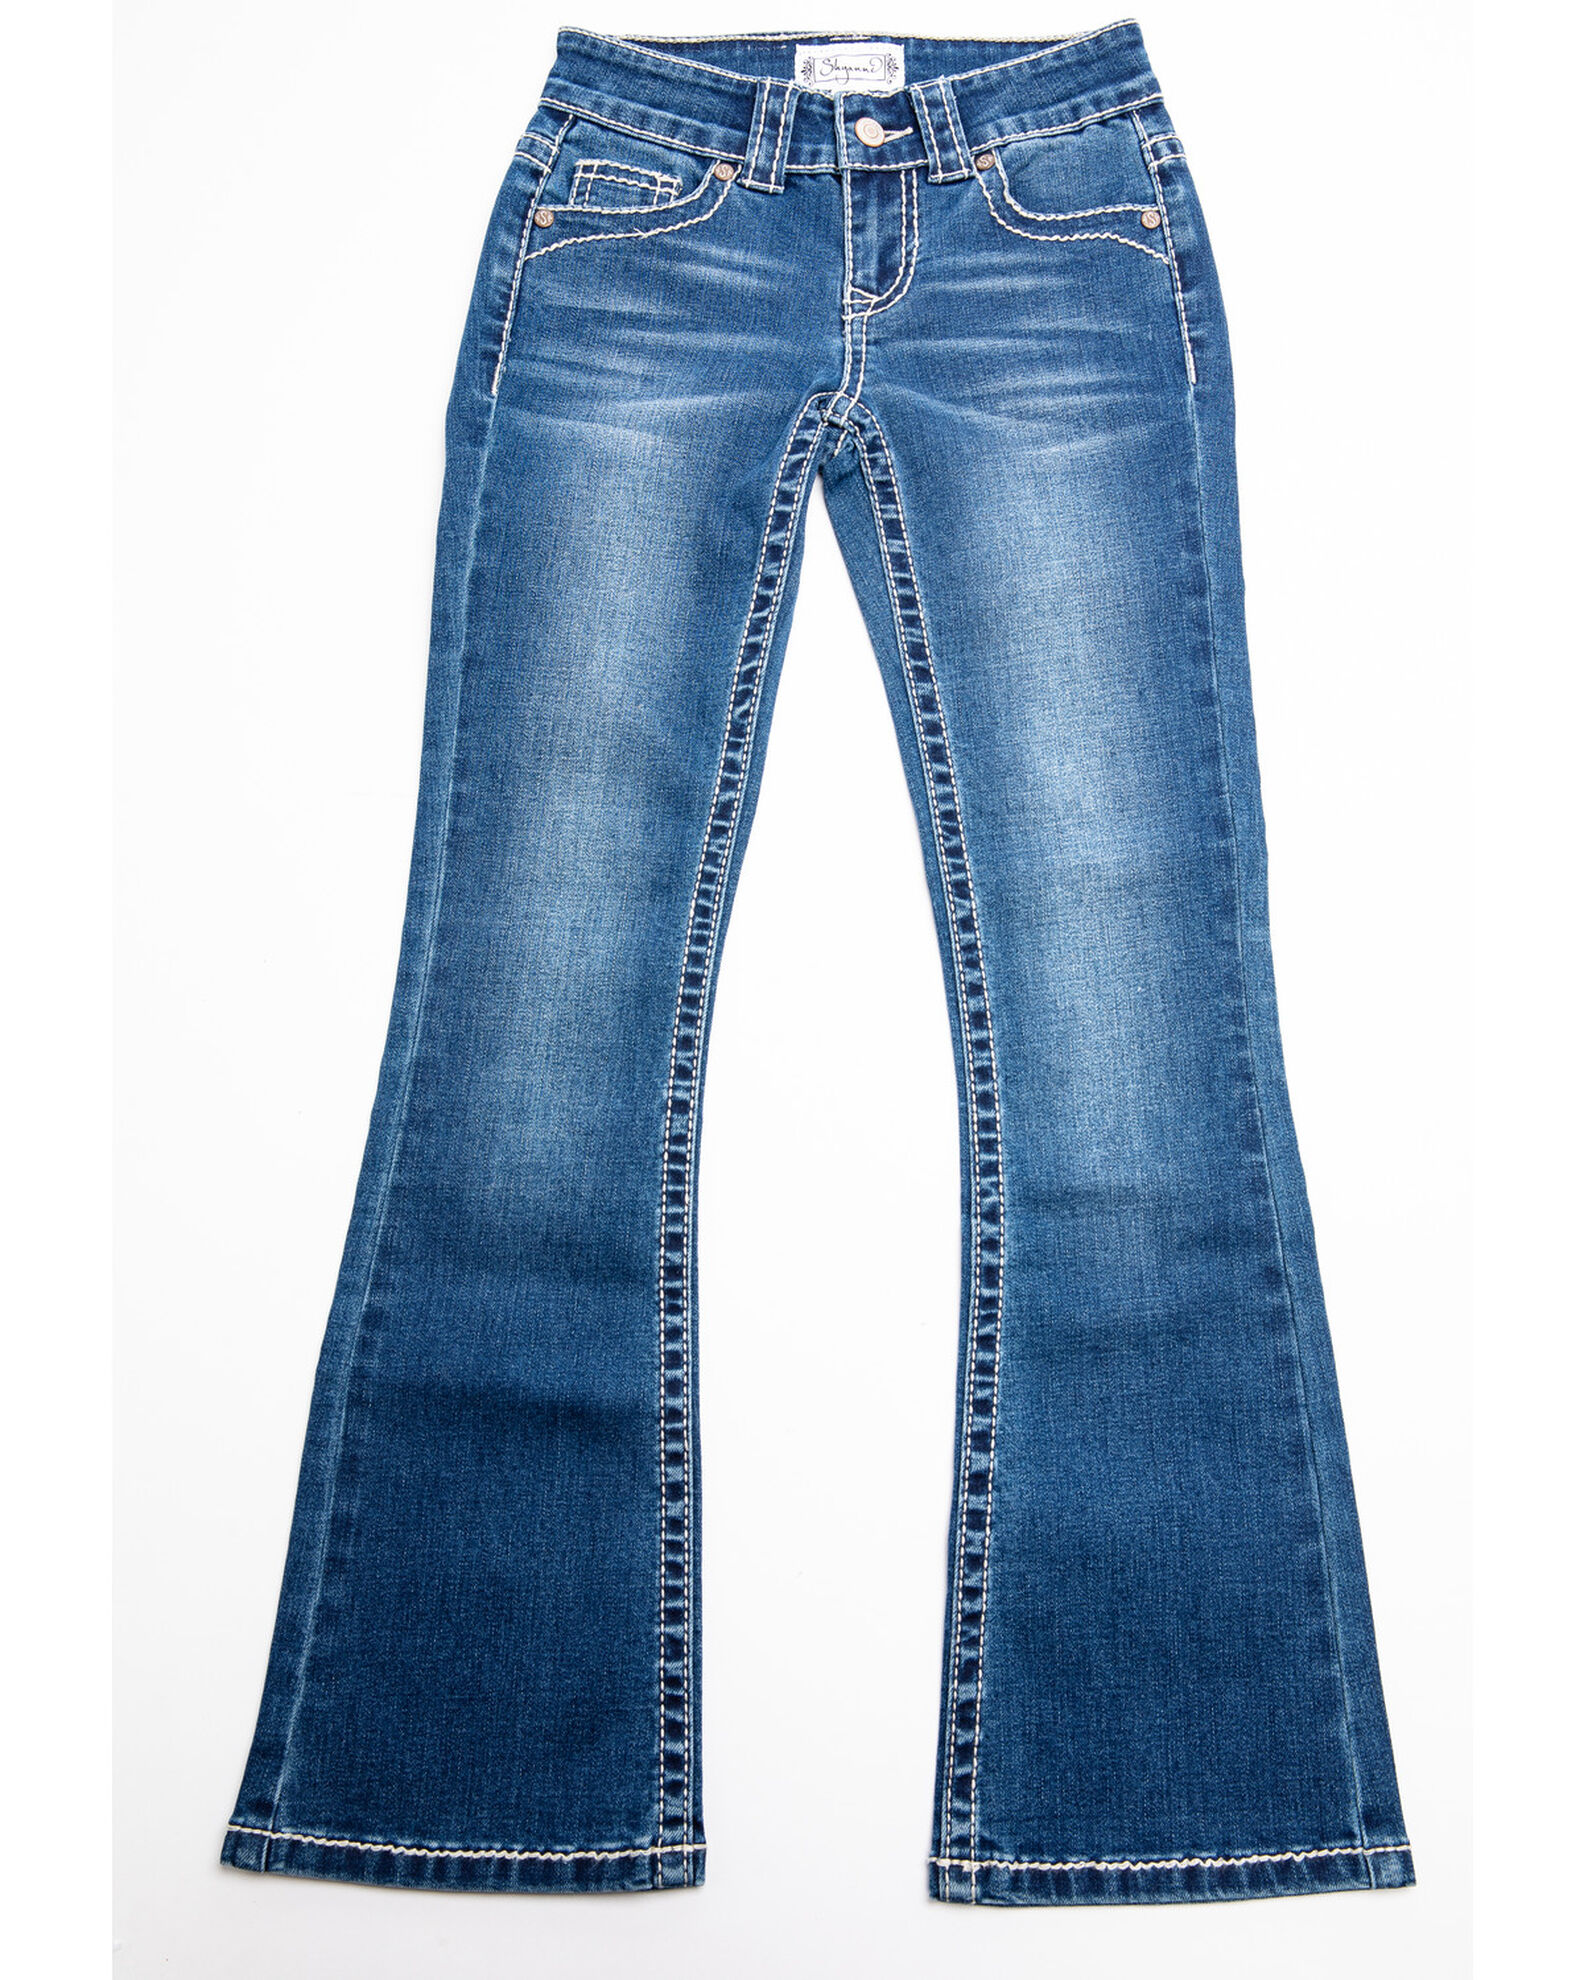 Shyanne Women's Contrast Patches Bootcut Jeans Medium Wash 33W x